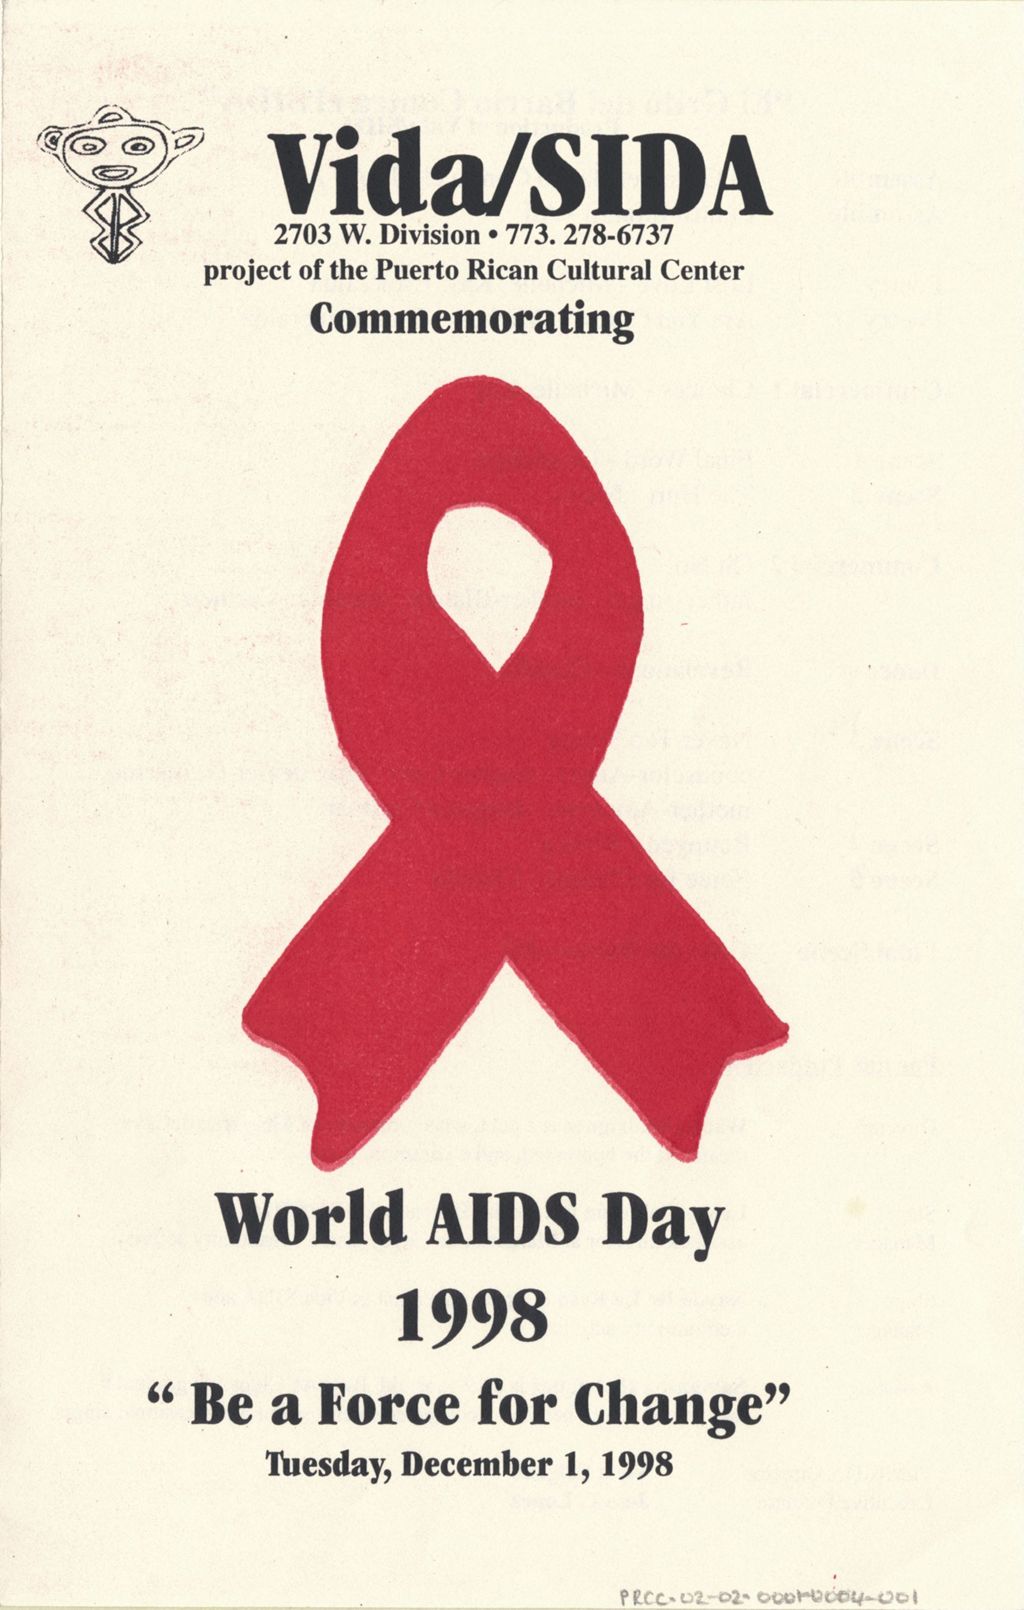 Miniature of VIDA/SIDA